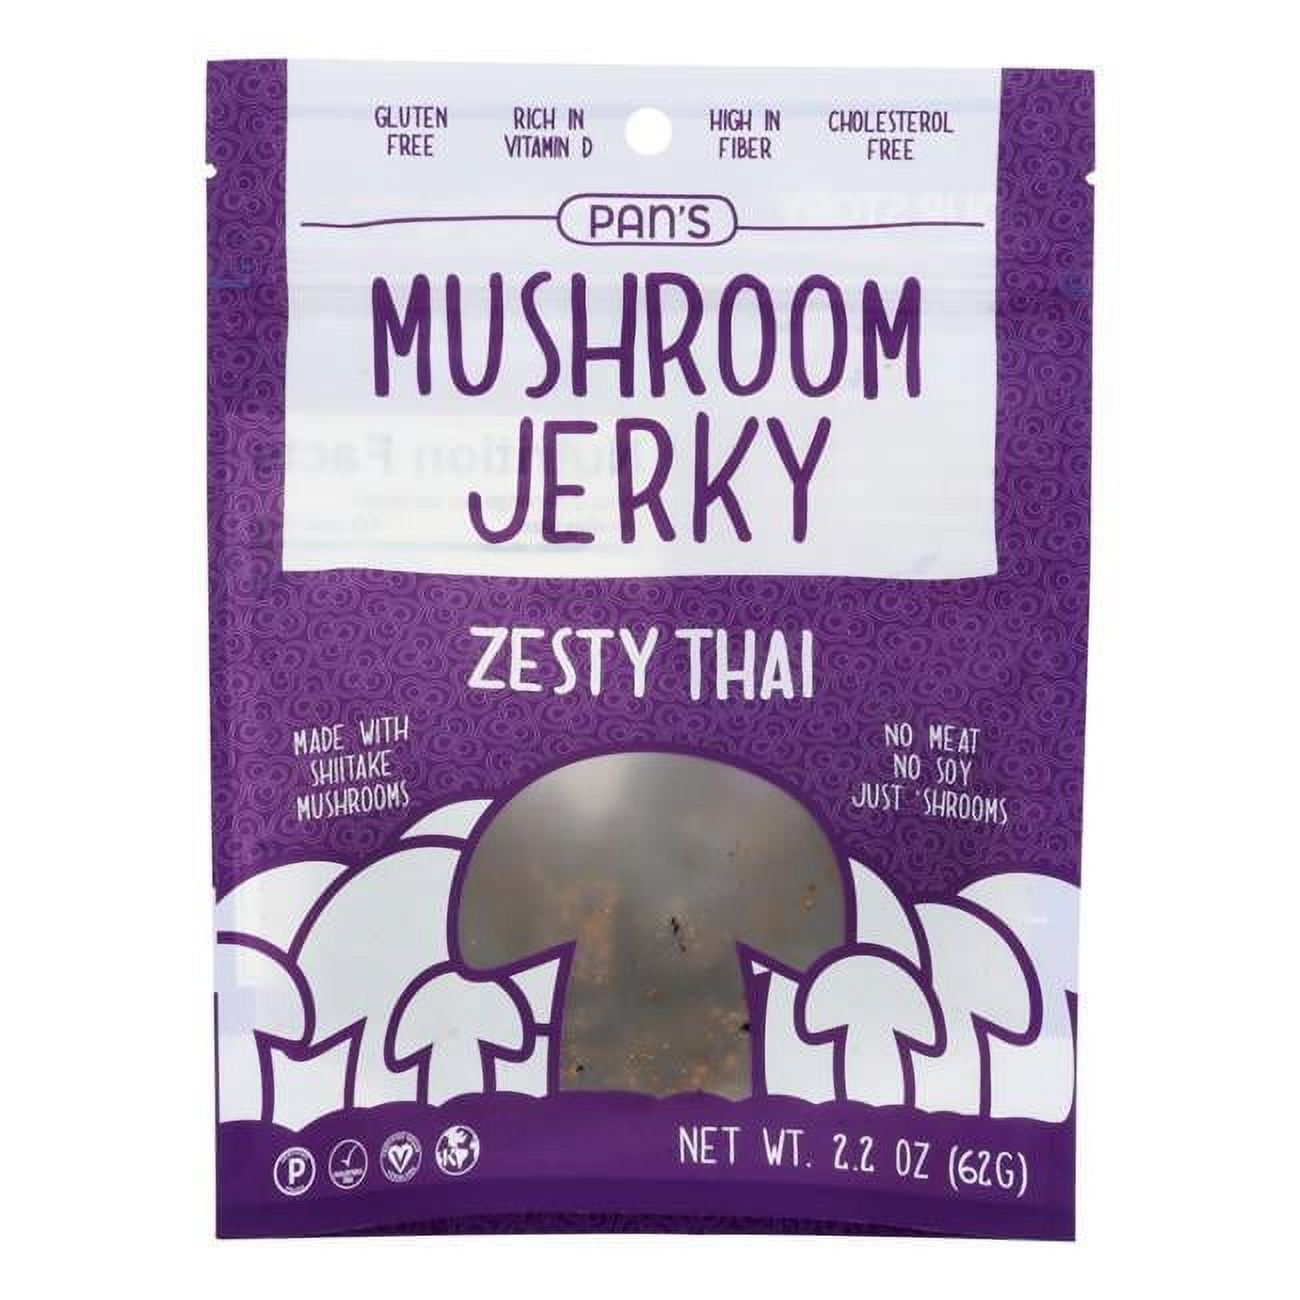 Pan's - Mushroom Jerky Zesty Thai - 2.2 oz. - Walmart.com